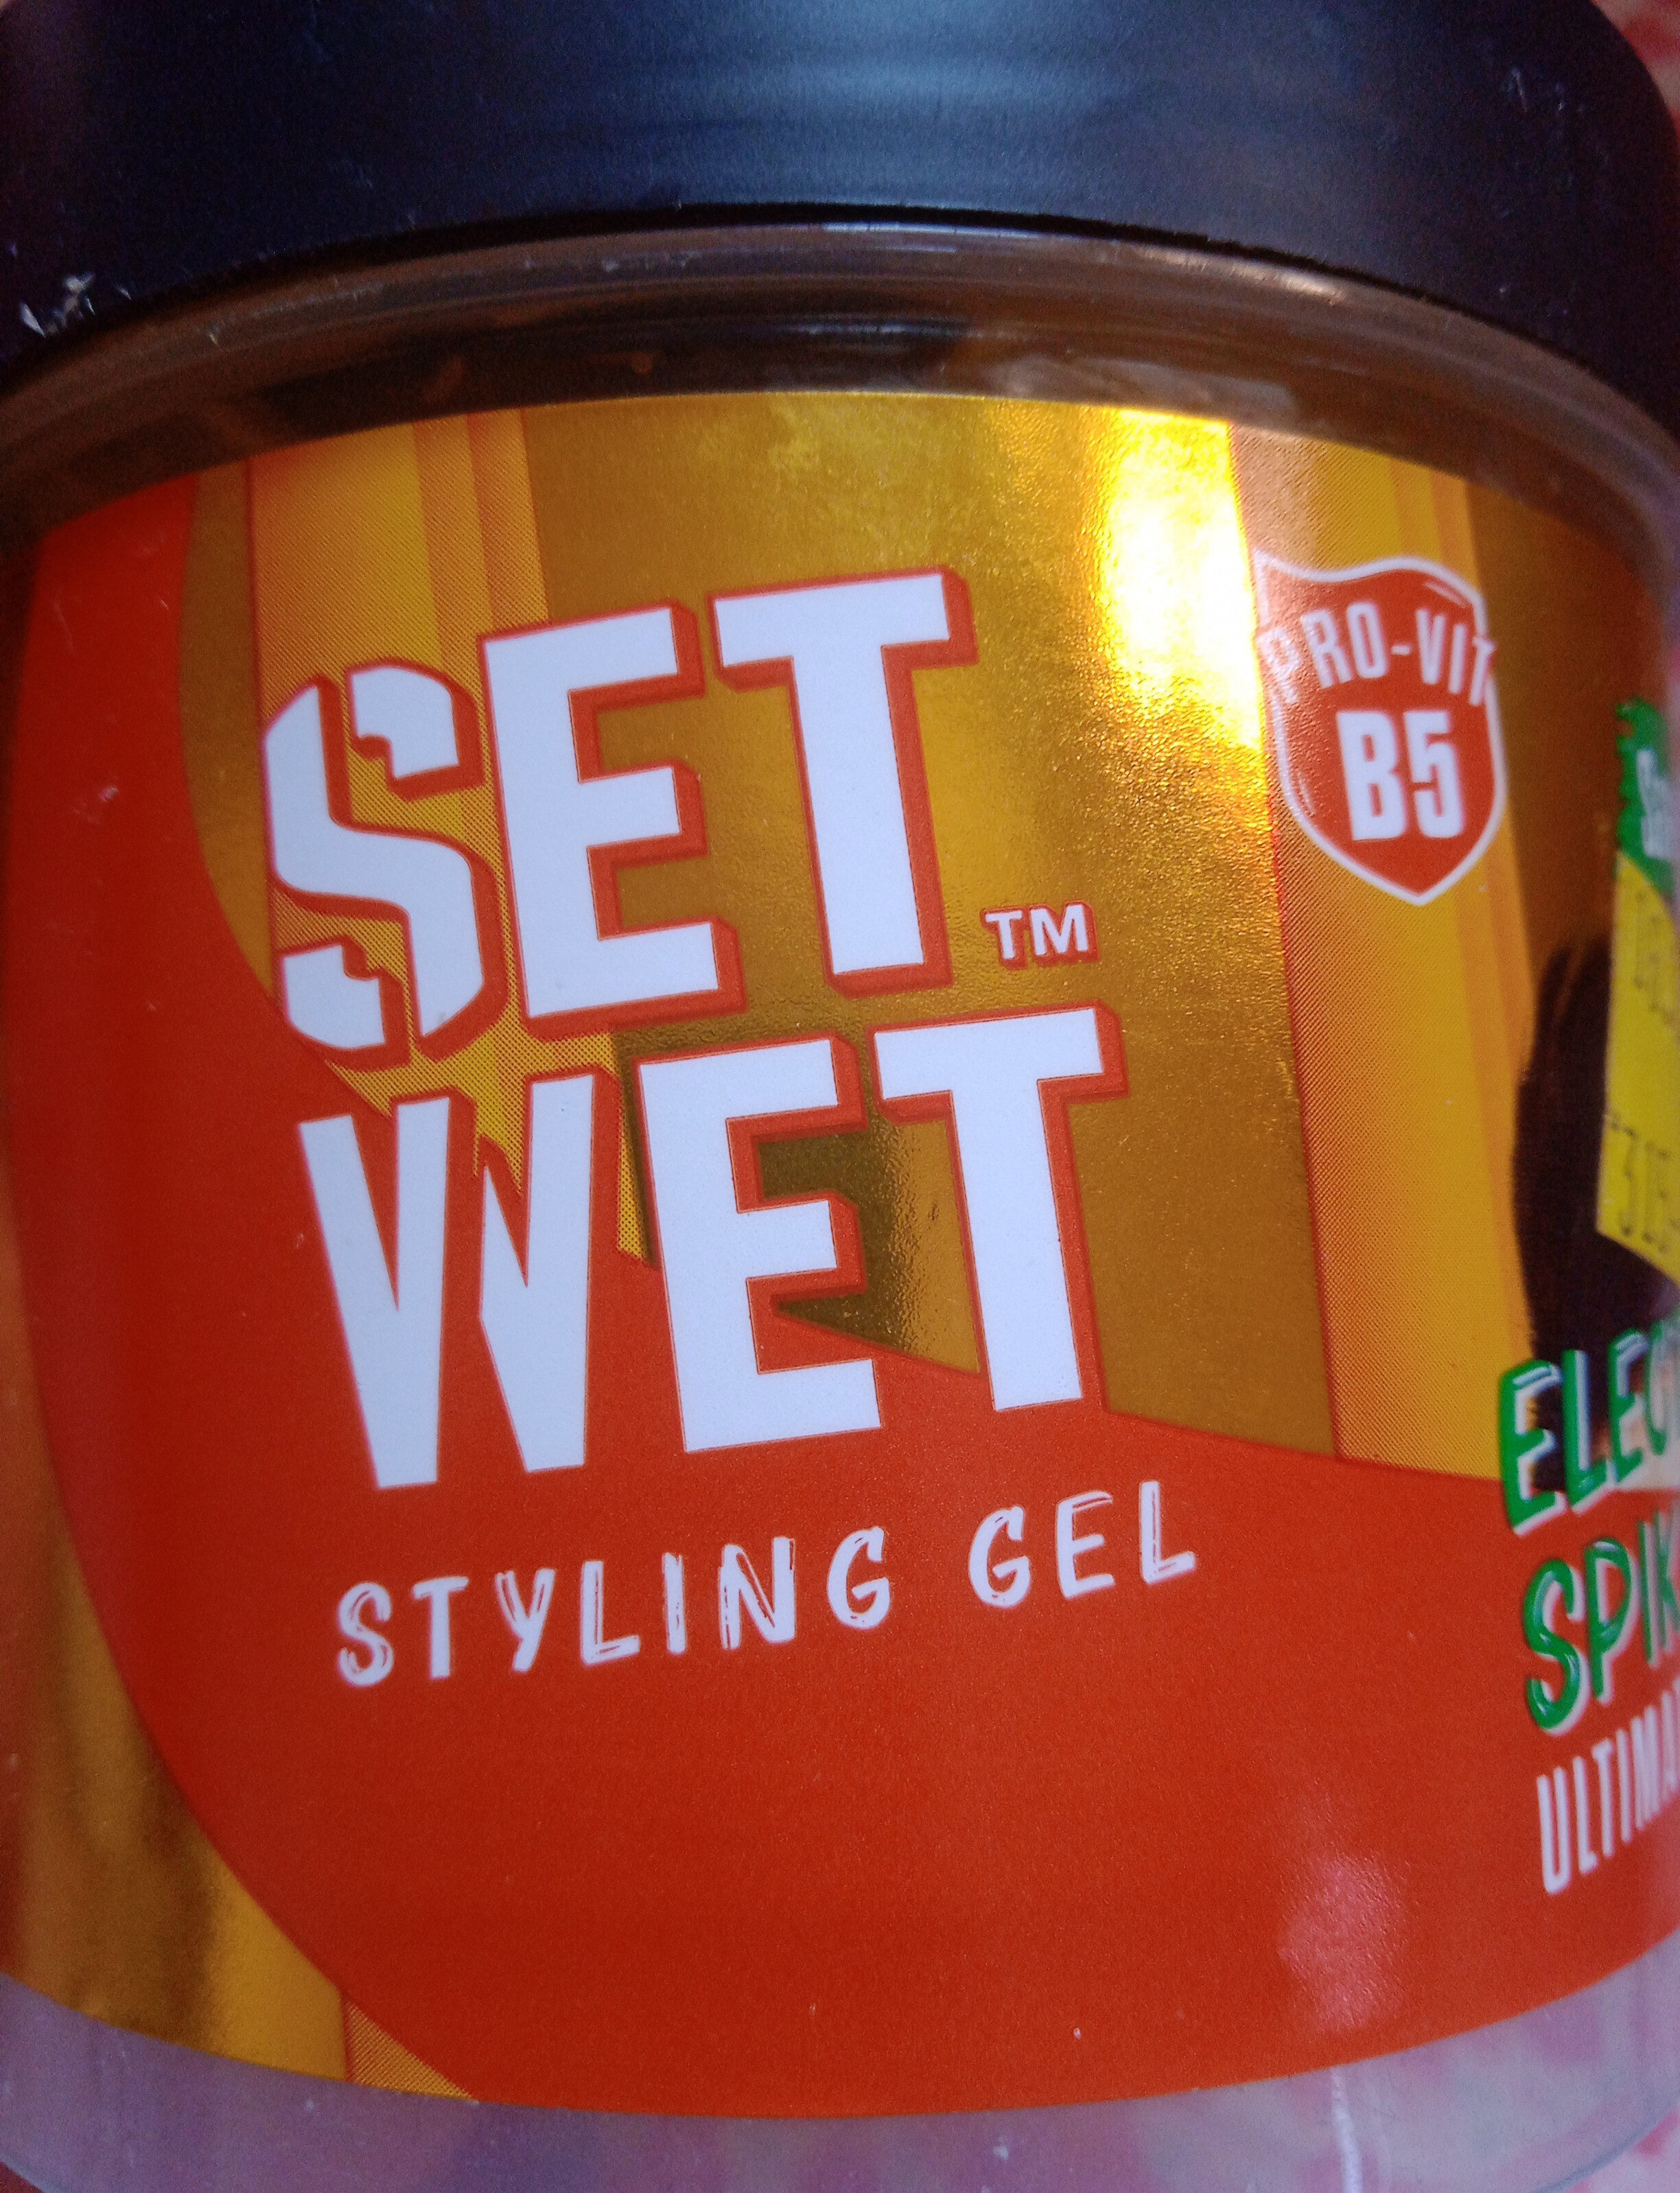 Set Wet - Product - en